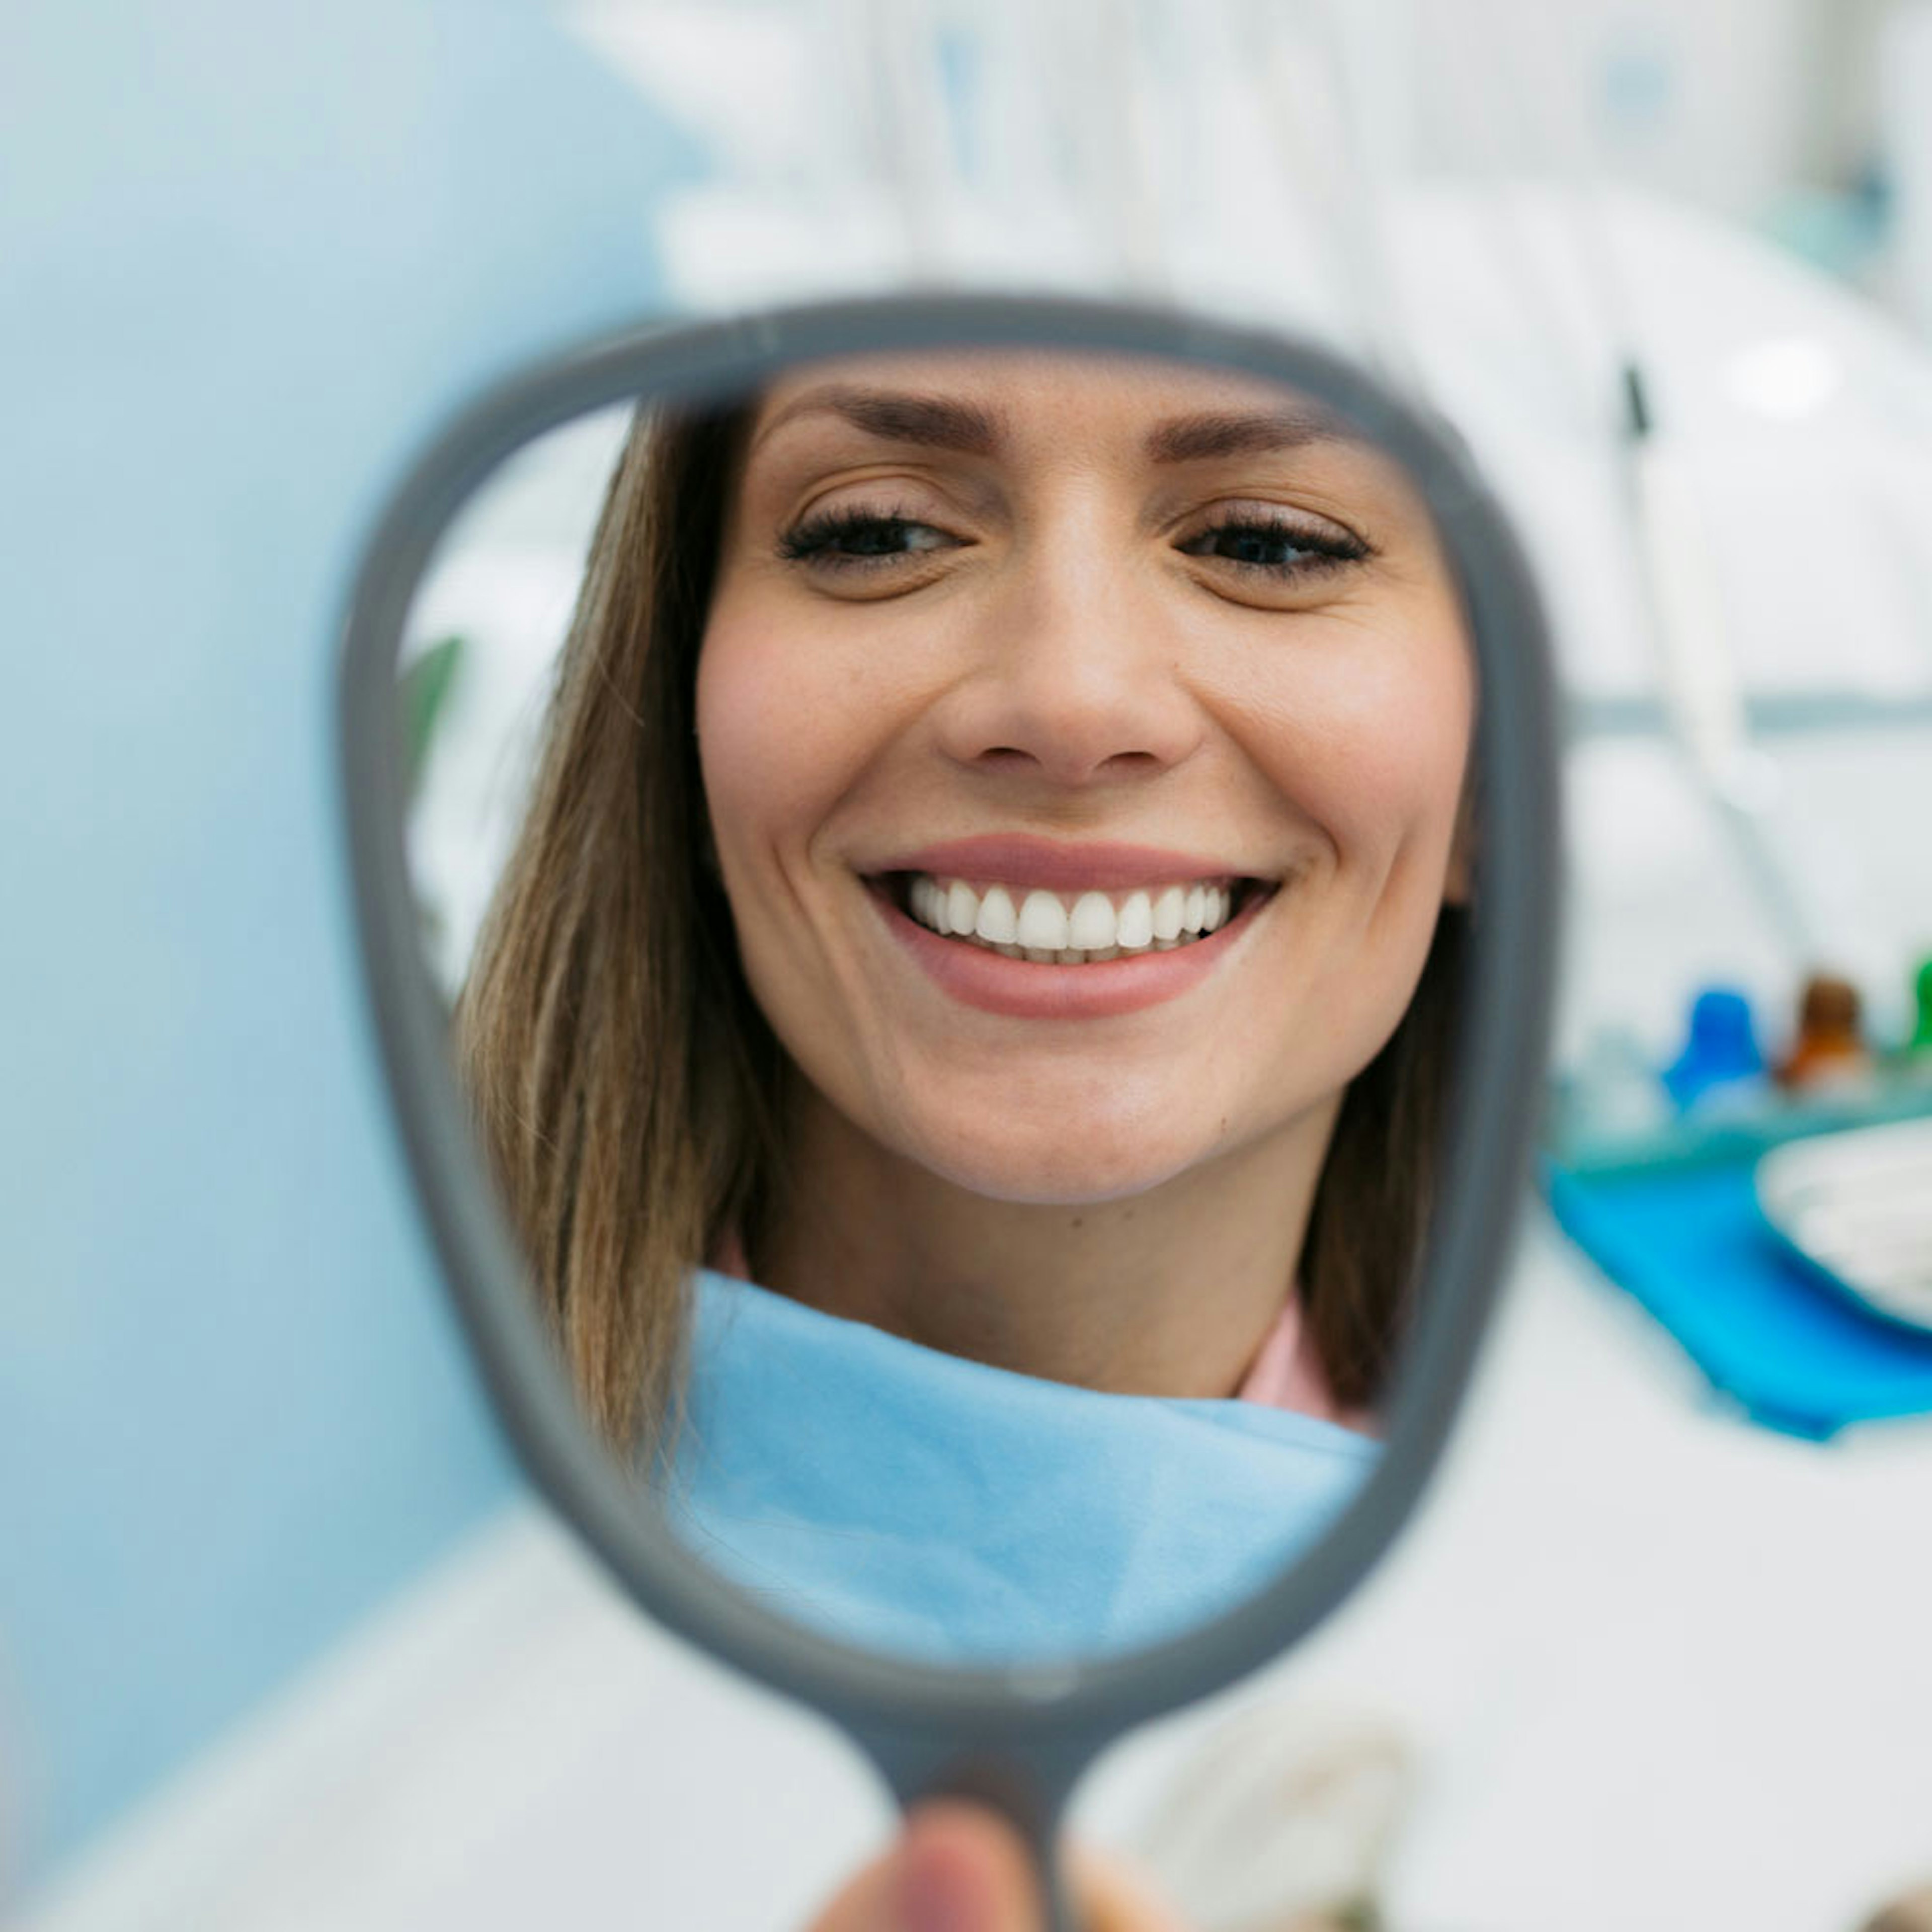 Woman smiling in mirror in dental office